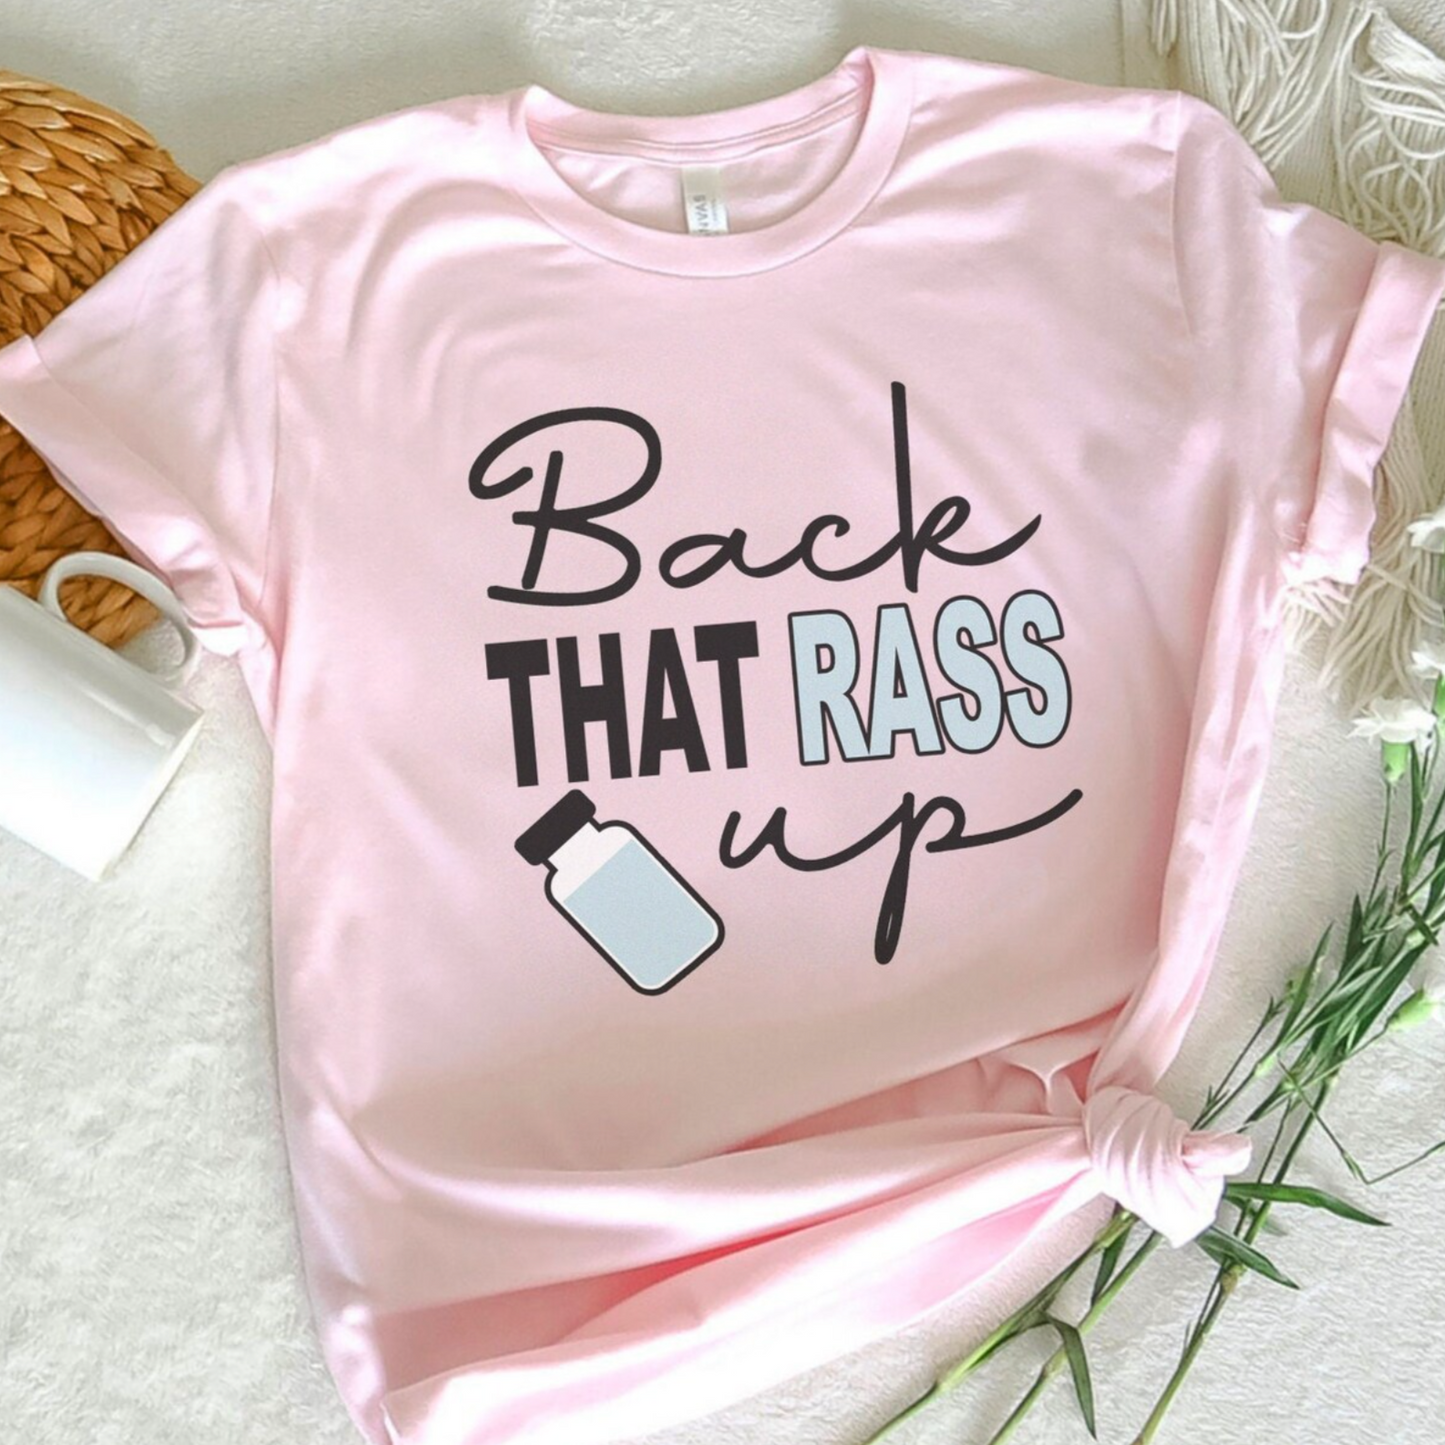 Back that RASS Up T-Shirt